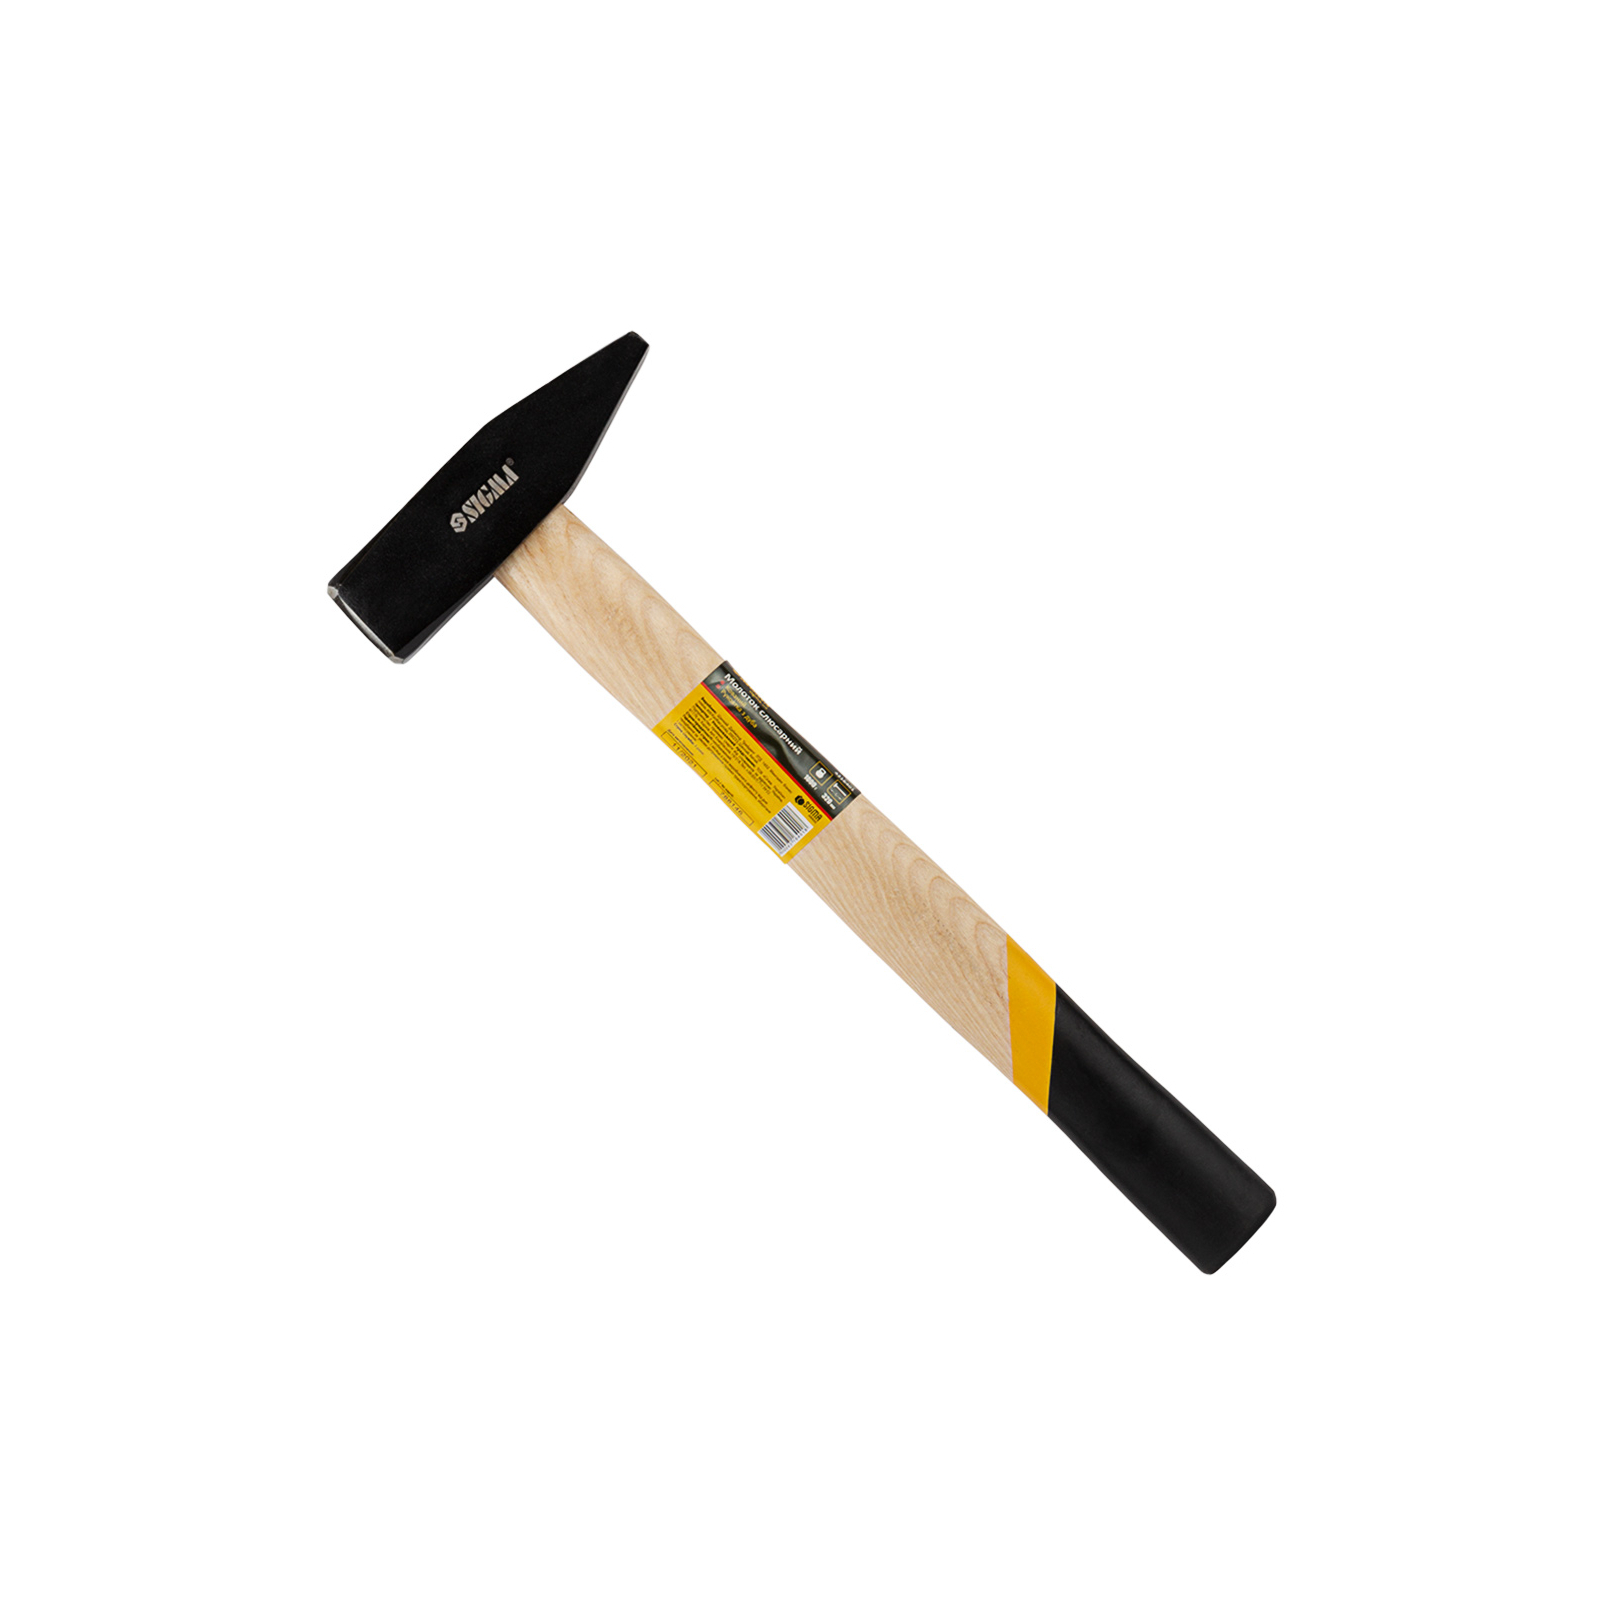 Молоток Sigma 1000г слюсарна дерев'яна ручка (дуб) (4316401)